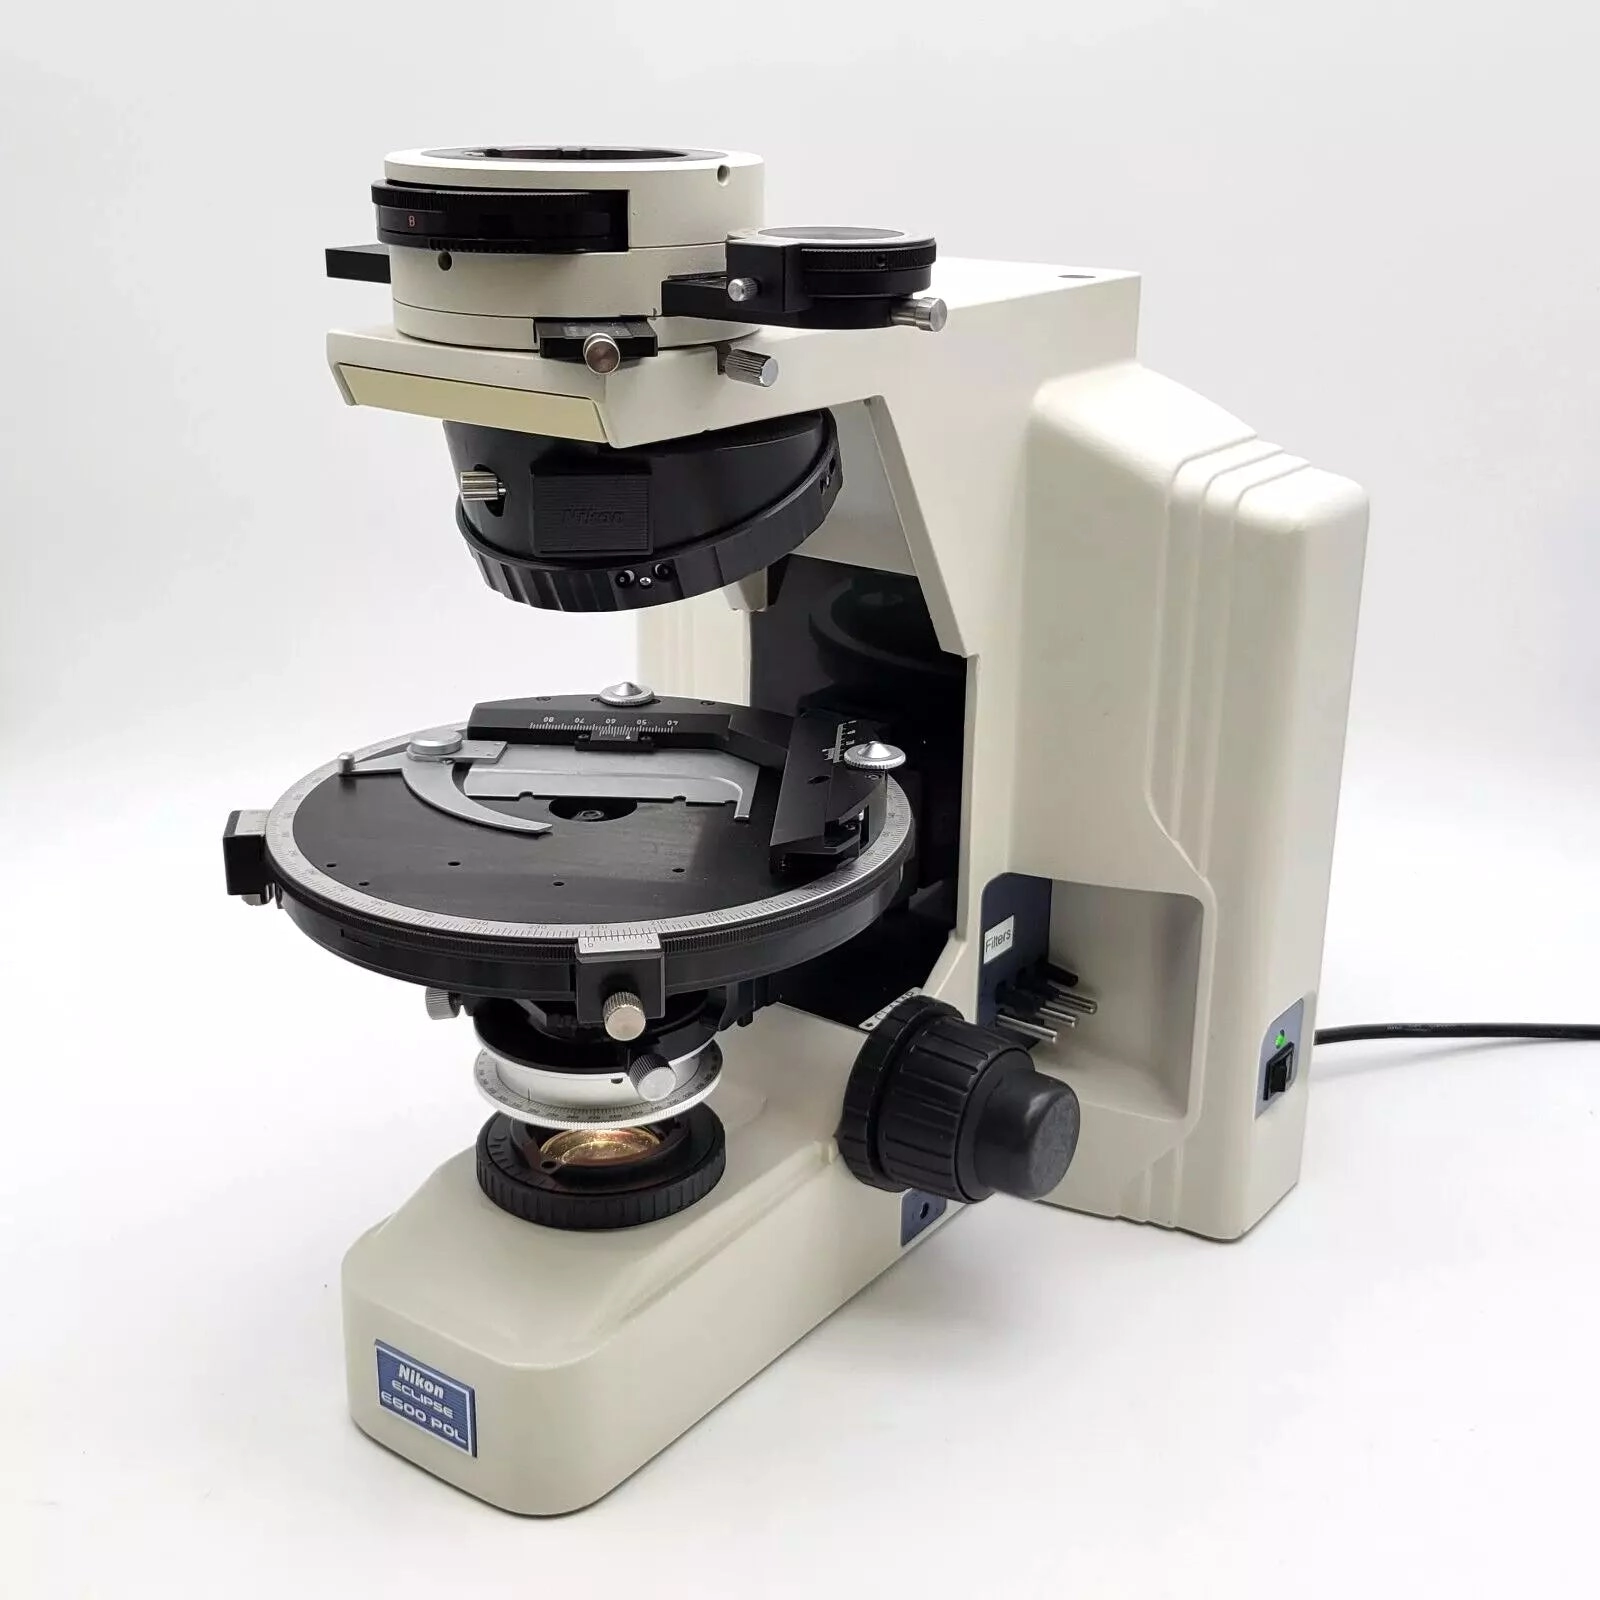 Nikon Microscope Eclipse E600 Pol Stand with Polarizing Accessories